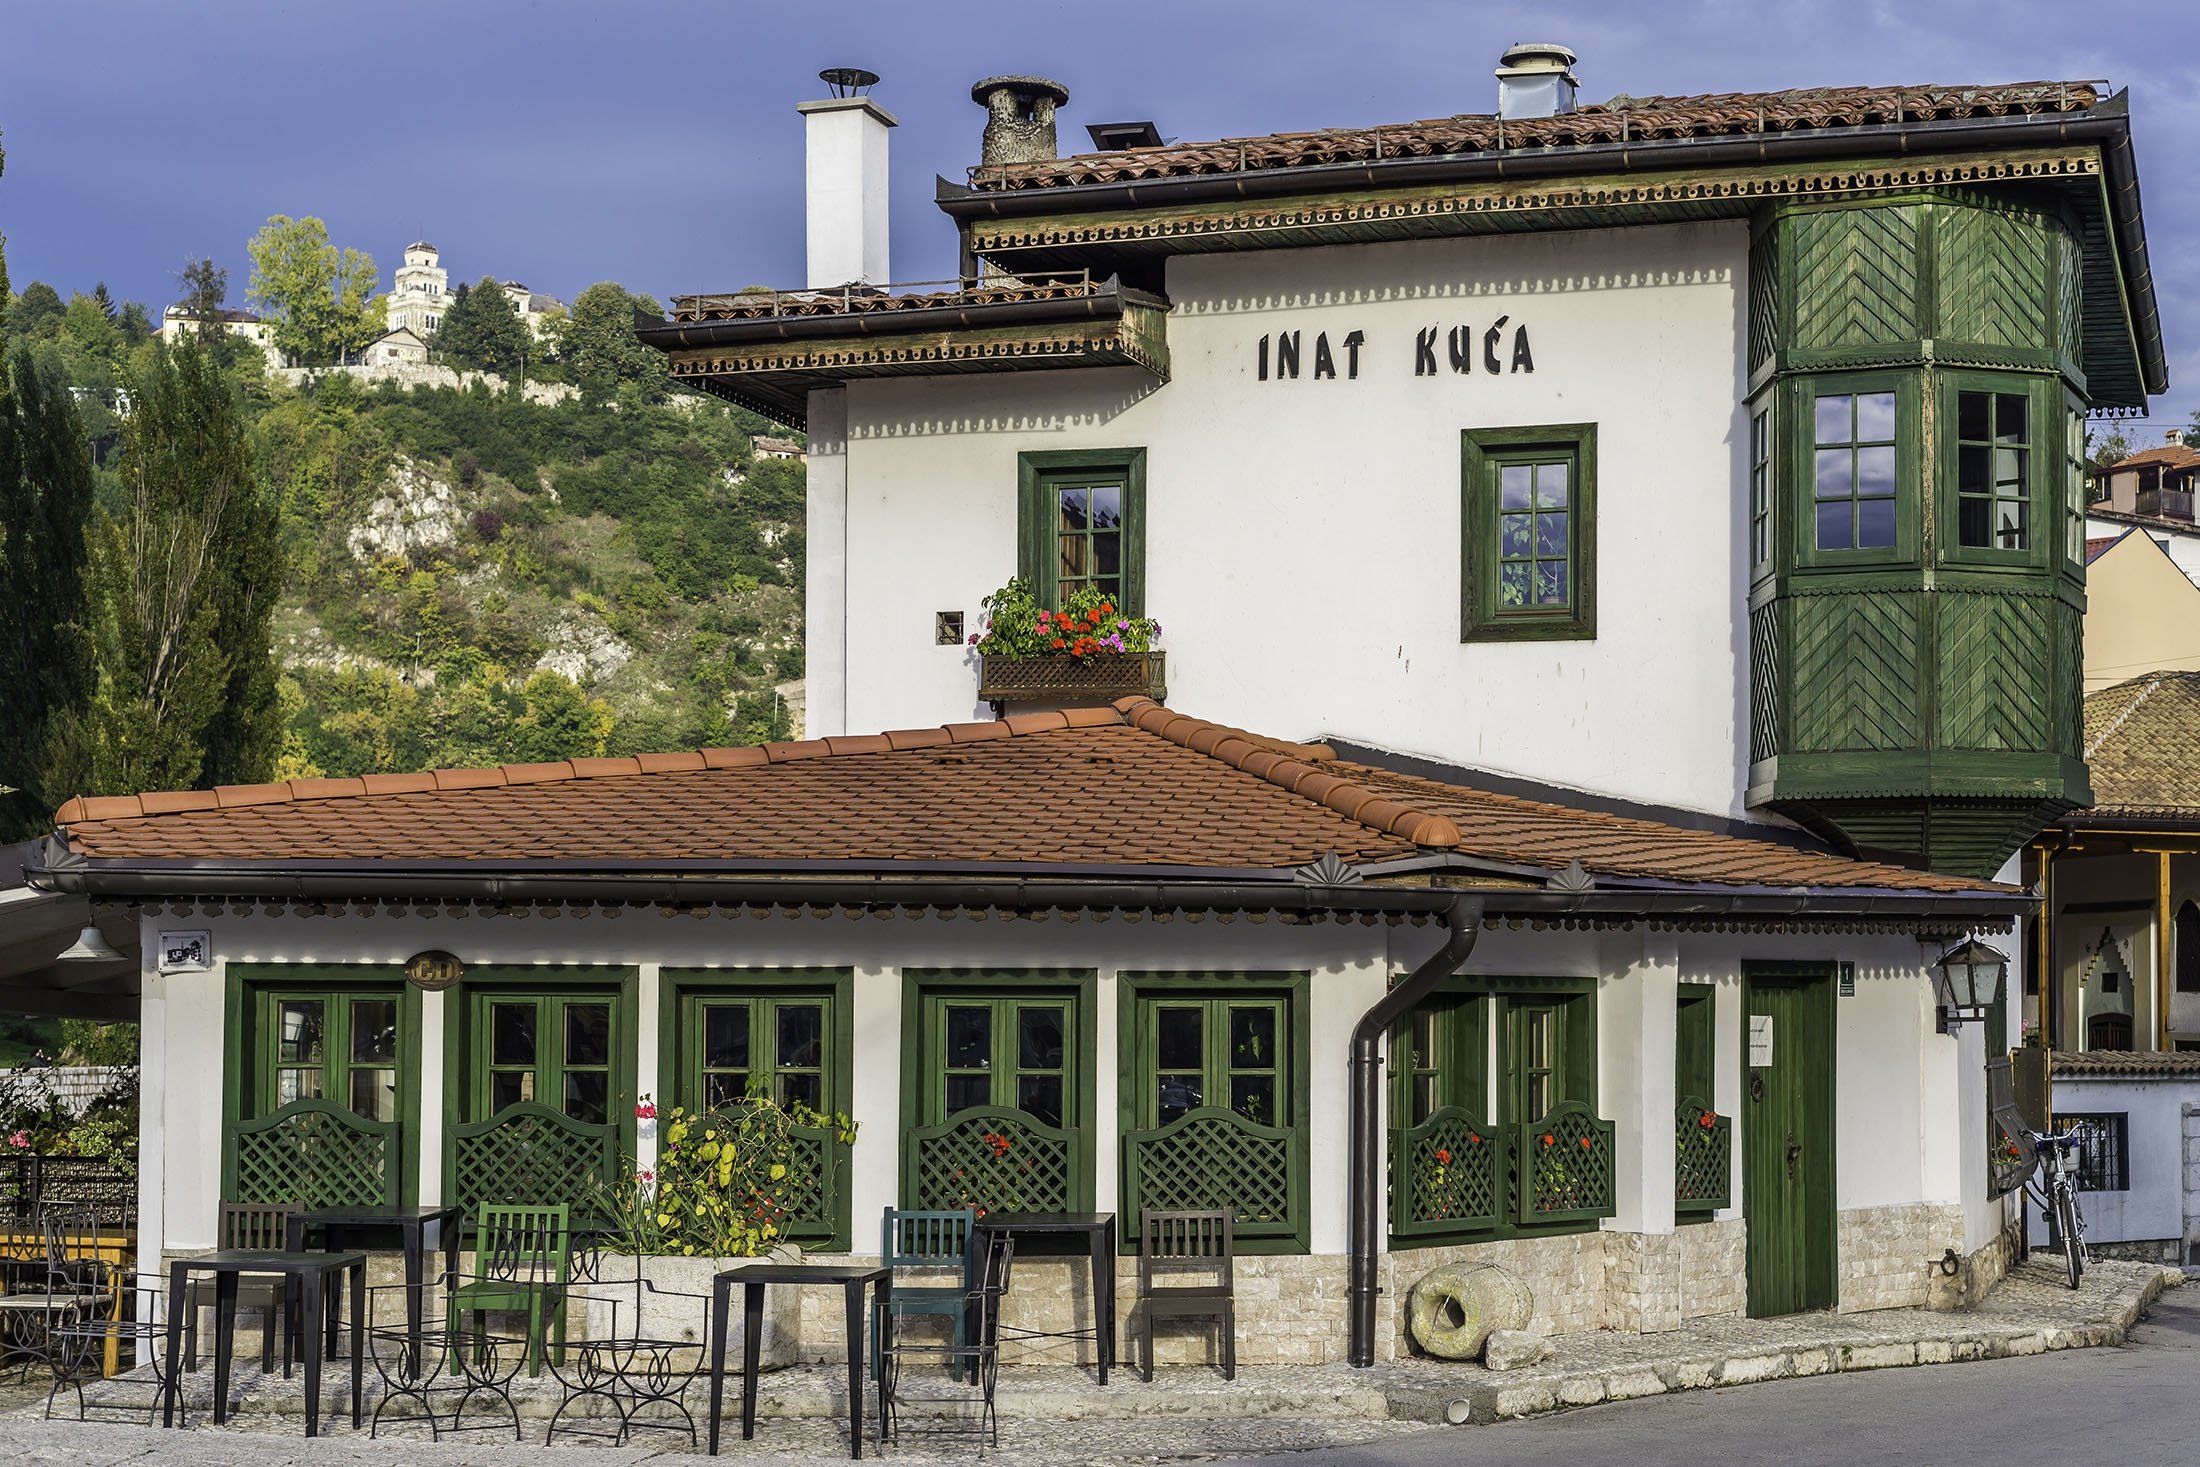 The Inat Kuca house, in Sarajevo, Bosnia-Herzegovina. (Shutterstock Photo)